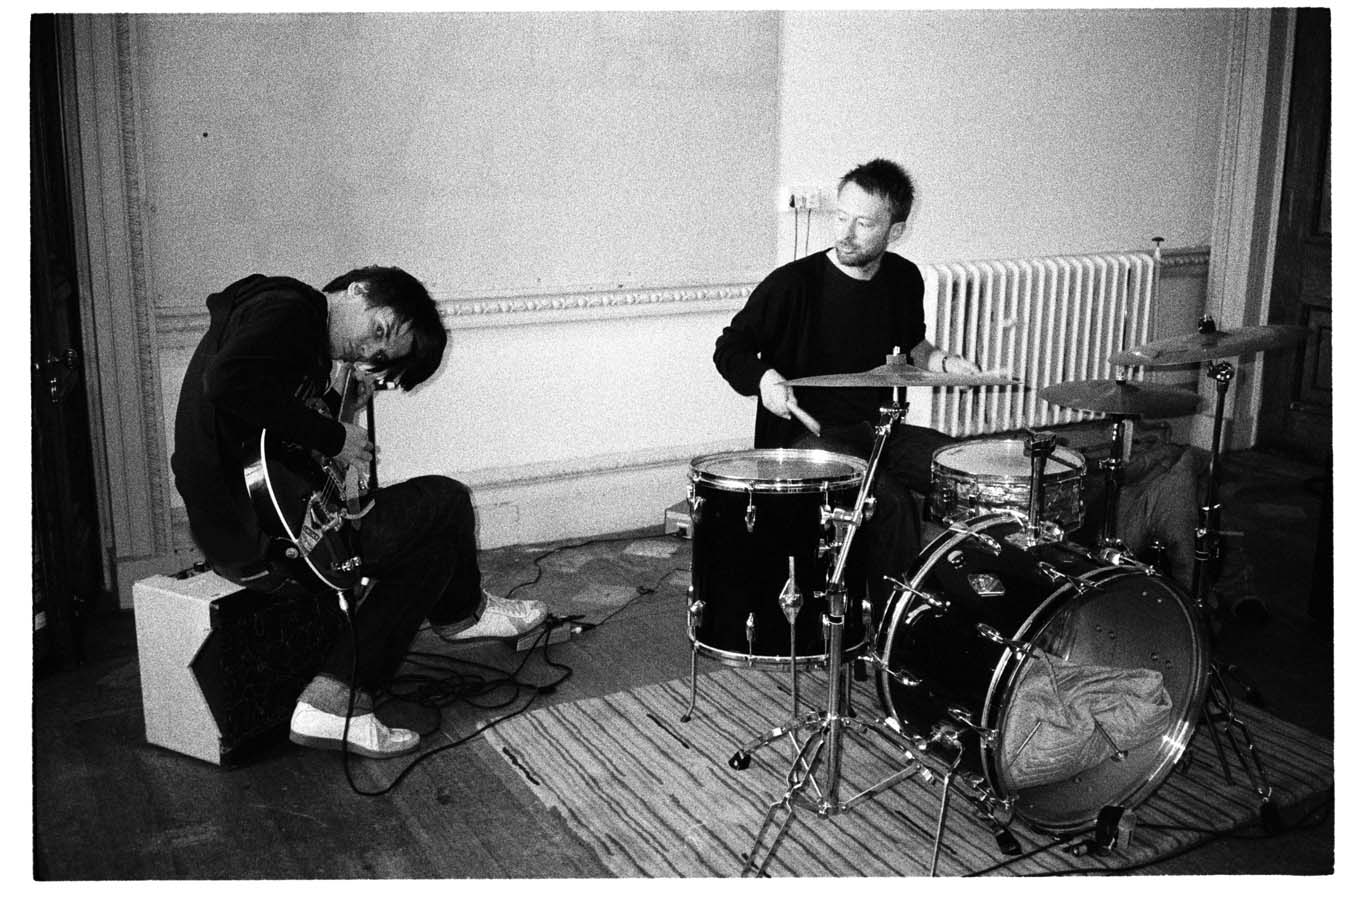 Radiohead Thom Yorke, Jonny Greewood photo black and white